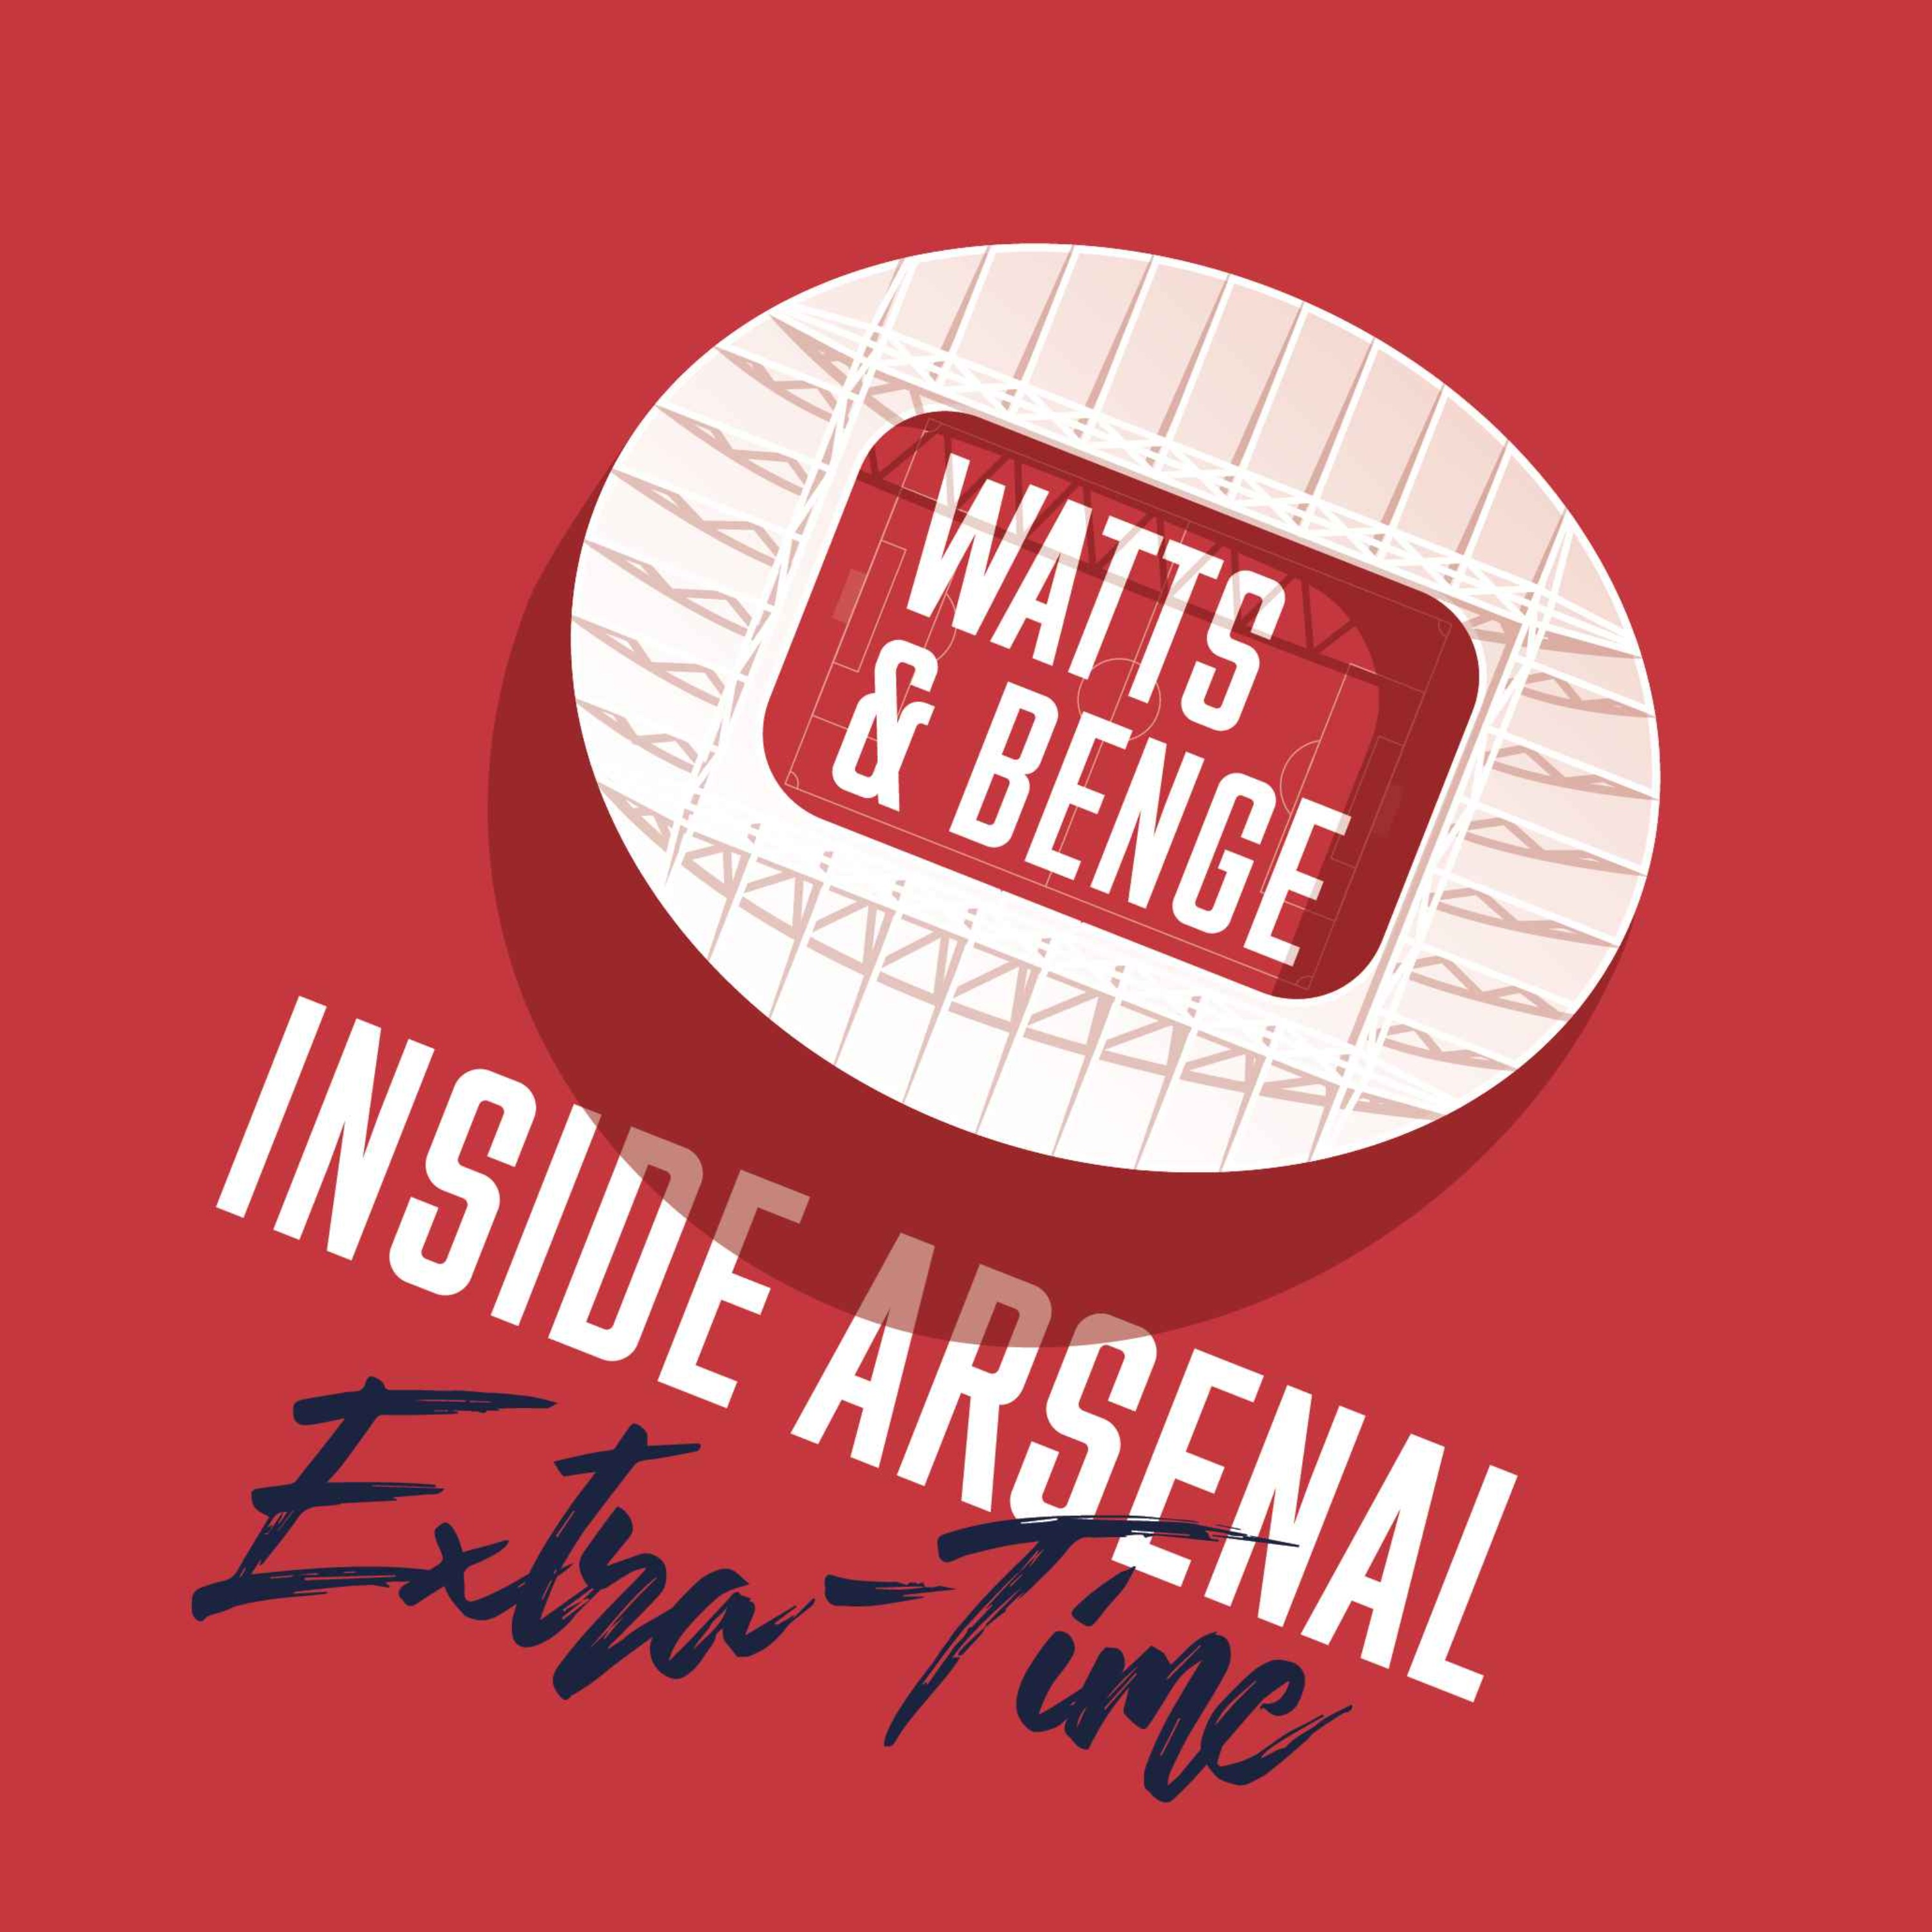 Extra-time with James Benge - Replacing Tomiyasu + Villa preview and Unai Emery memories